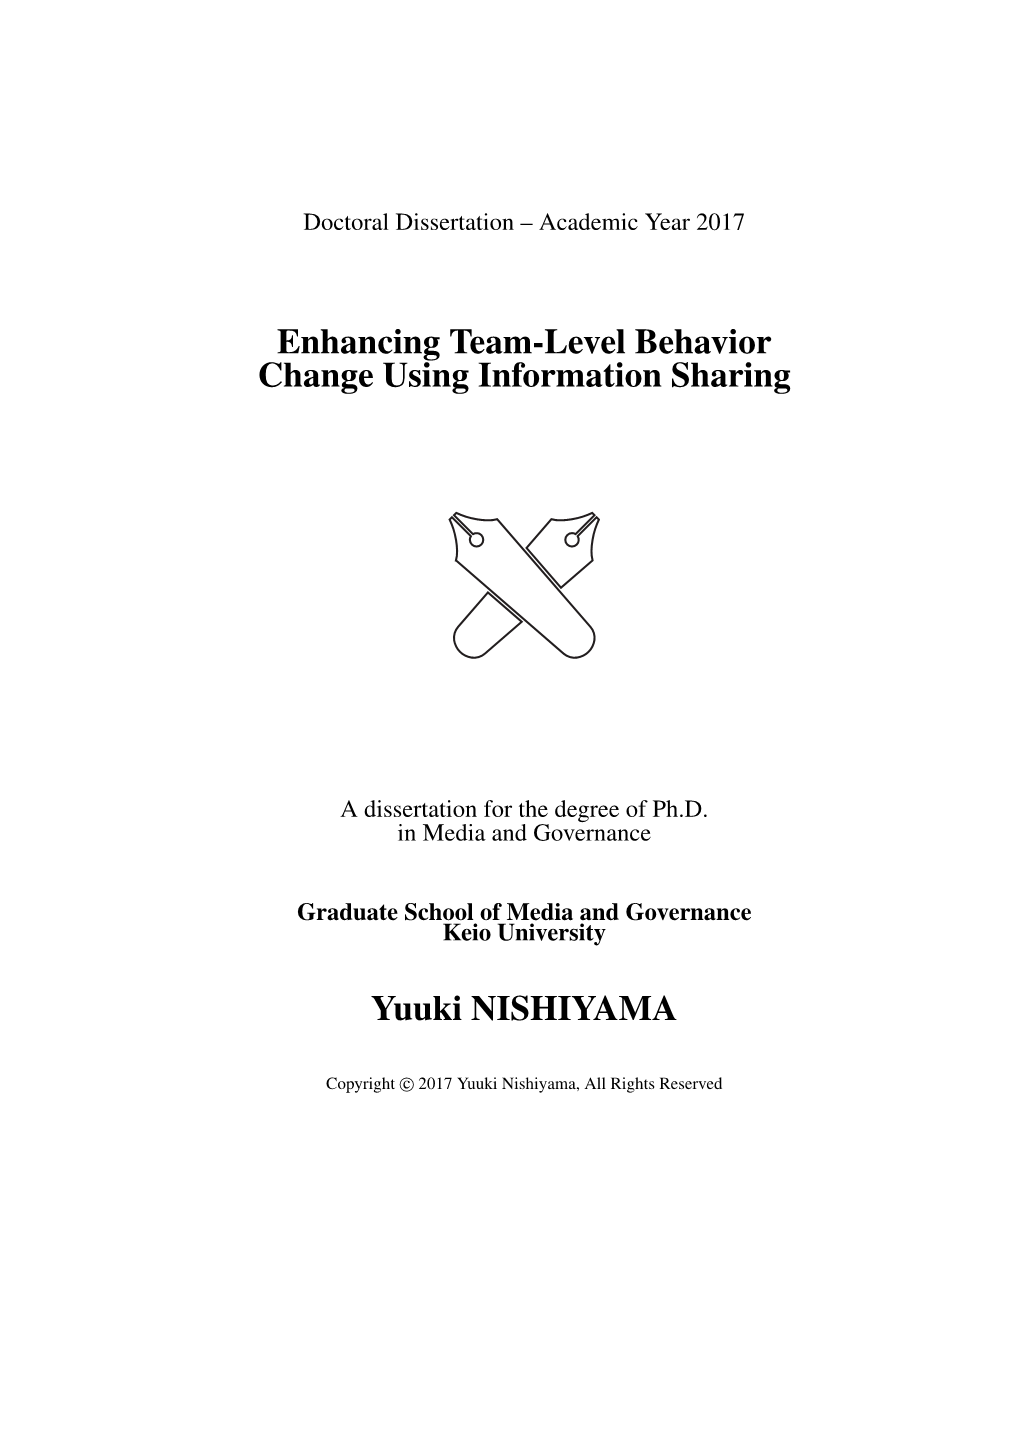 Enhancing Team-Level Behavior Change Using Information Sharing